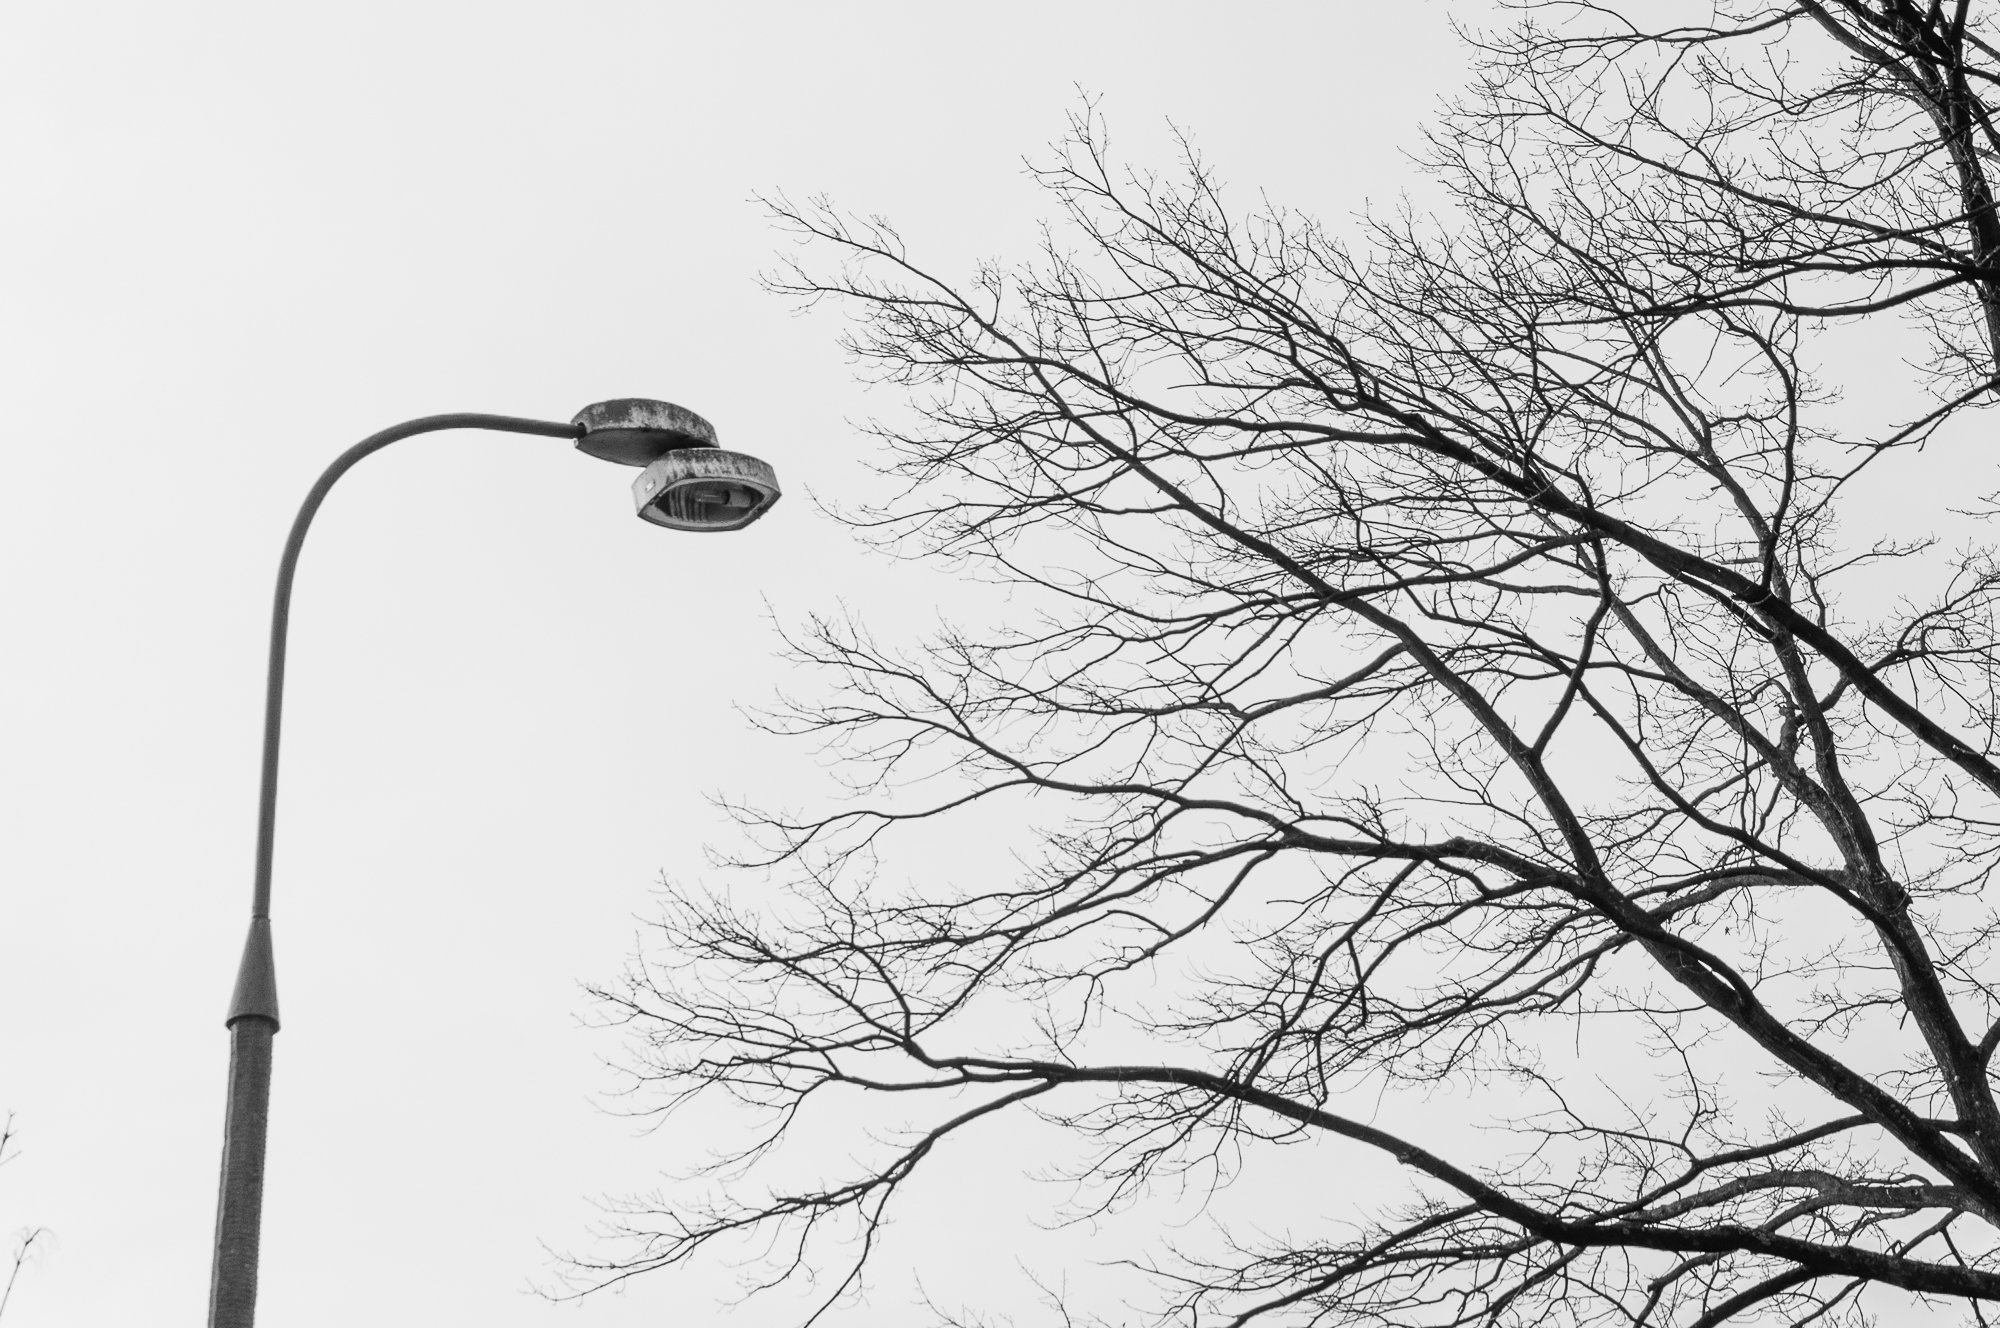 Adam Mazek Photography Warsaw (Warszawa) 2020. Post: "Freedom to express oneself." Minimalism. Street lamp and trees.